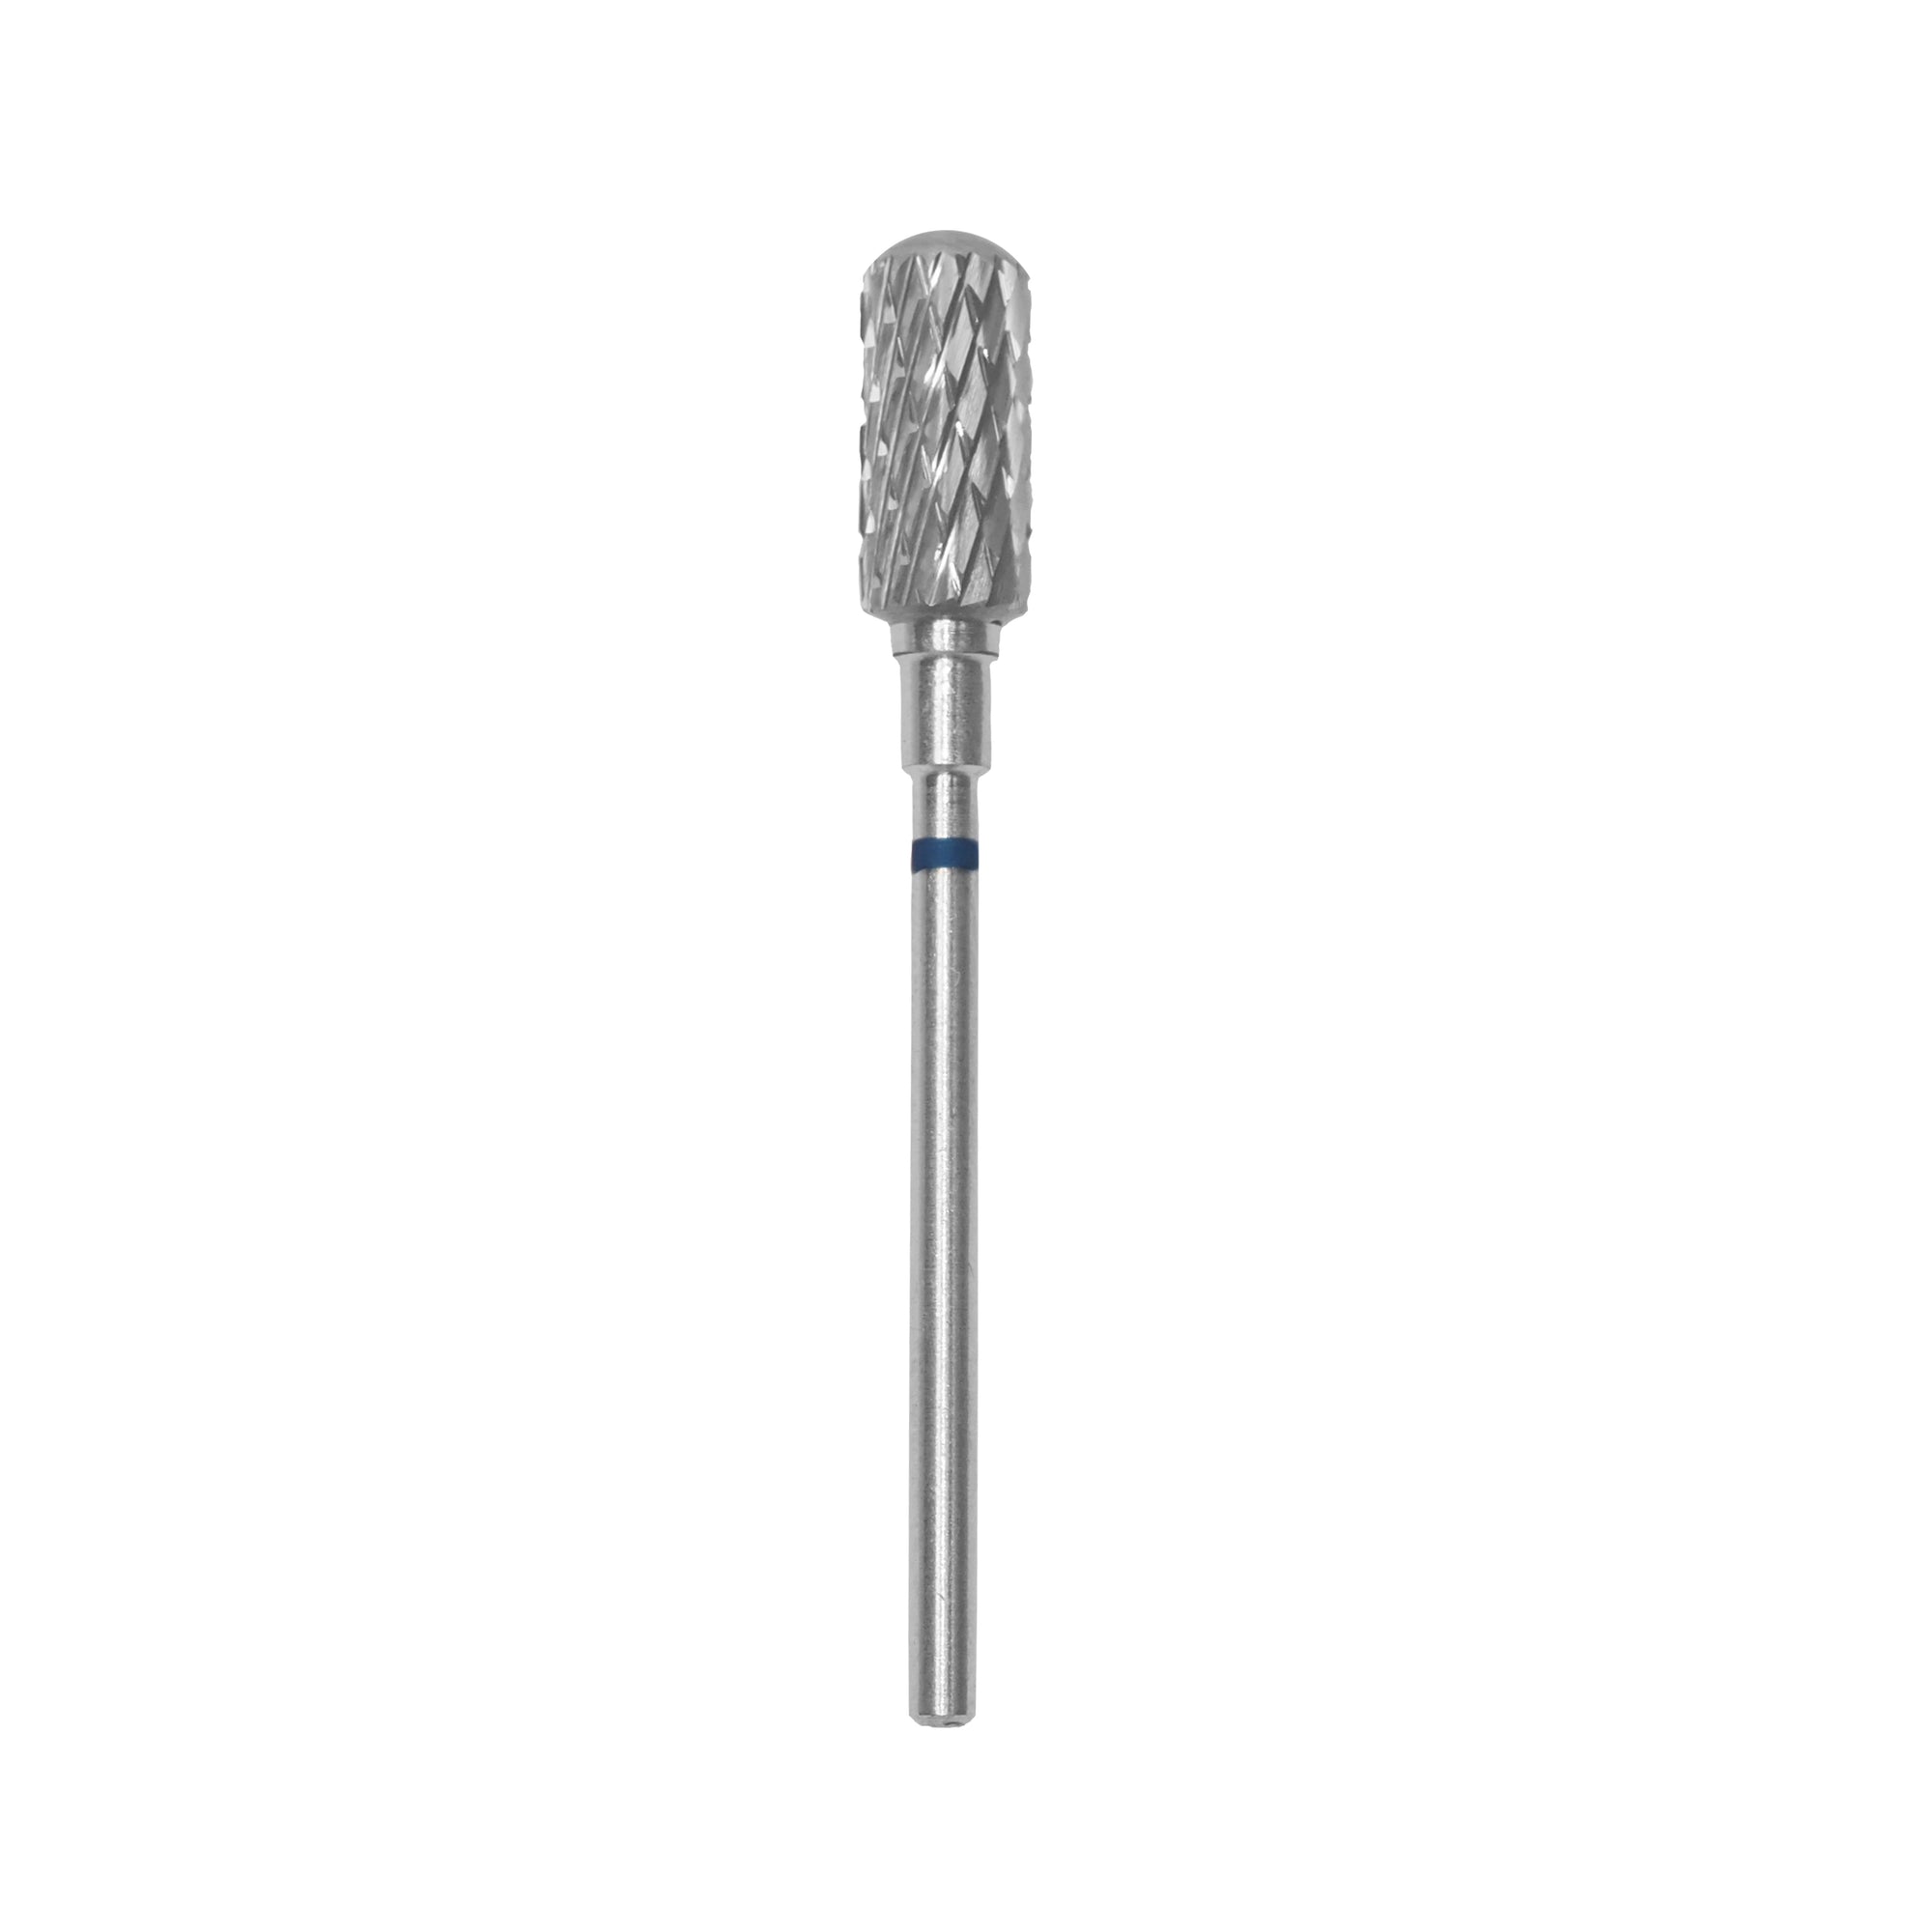 Staleks Carbide nail drill bit safe rounded cylinder blue EXPERT head diameter 6 mm/ working part 14 mm